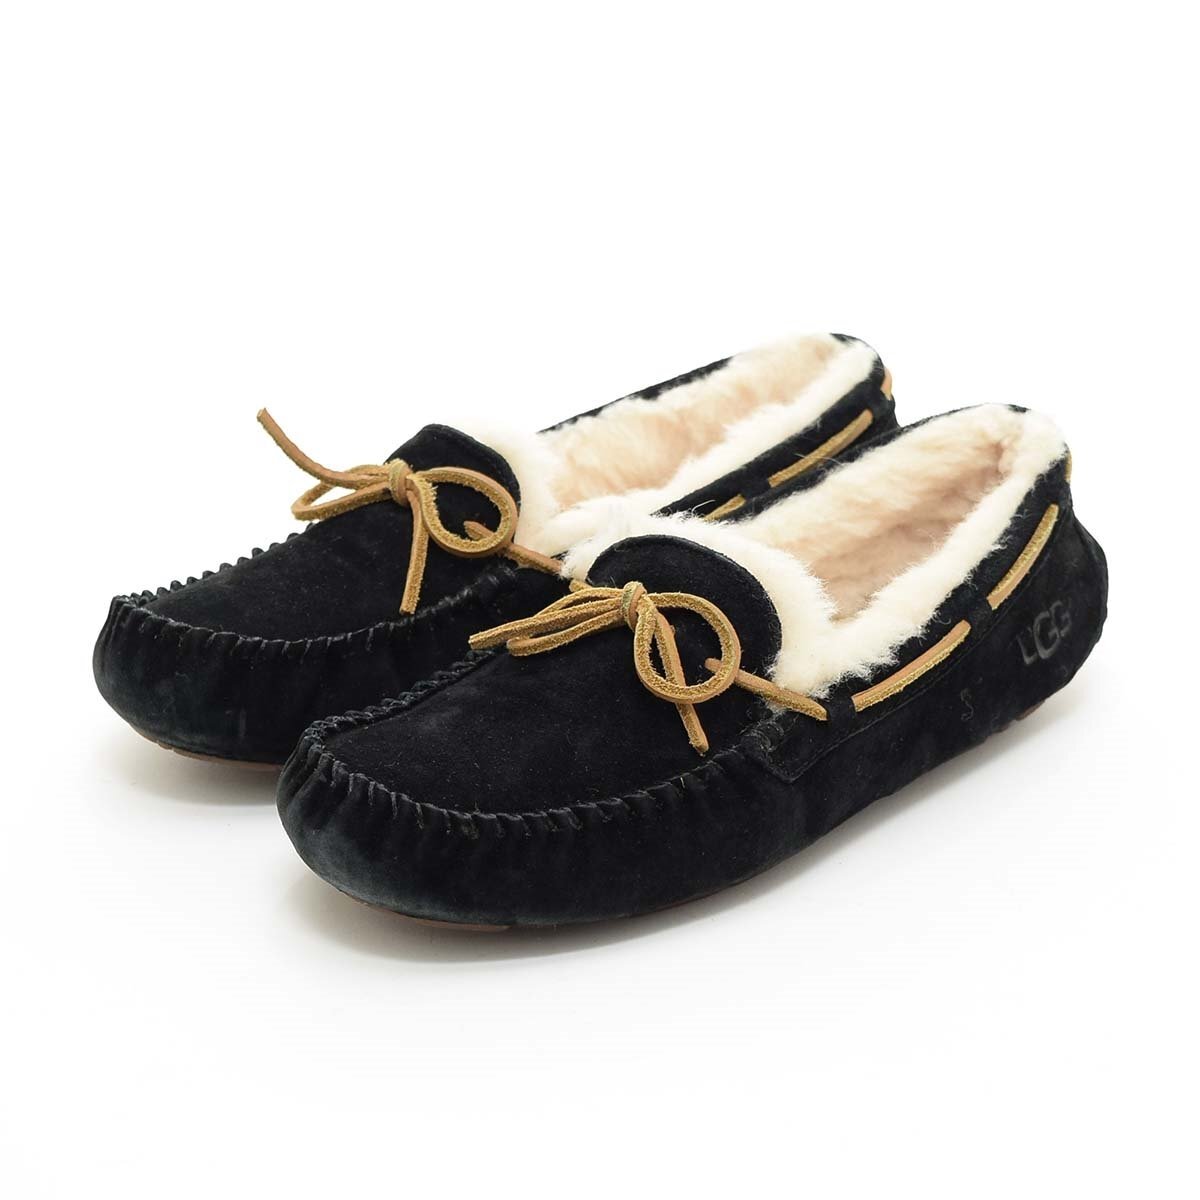 *511577 UGG UGG mouton shoes 5612 W DAKOTA dakota moccasin size 26.0cm lady's black 